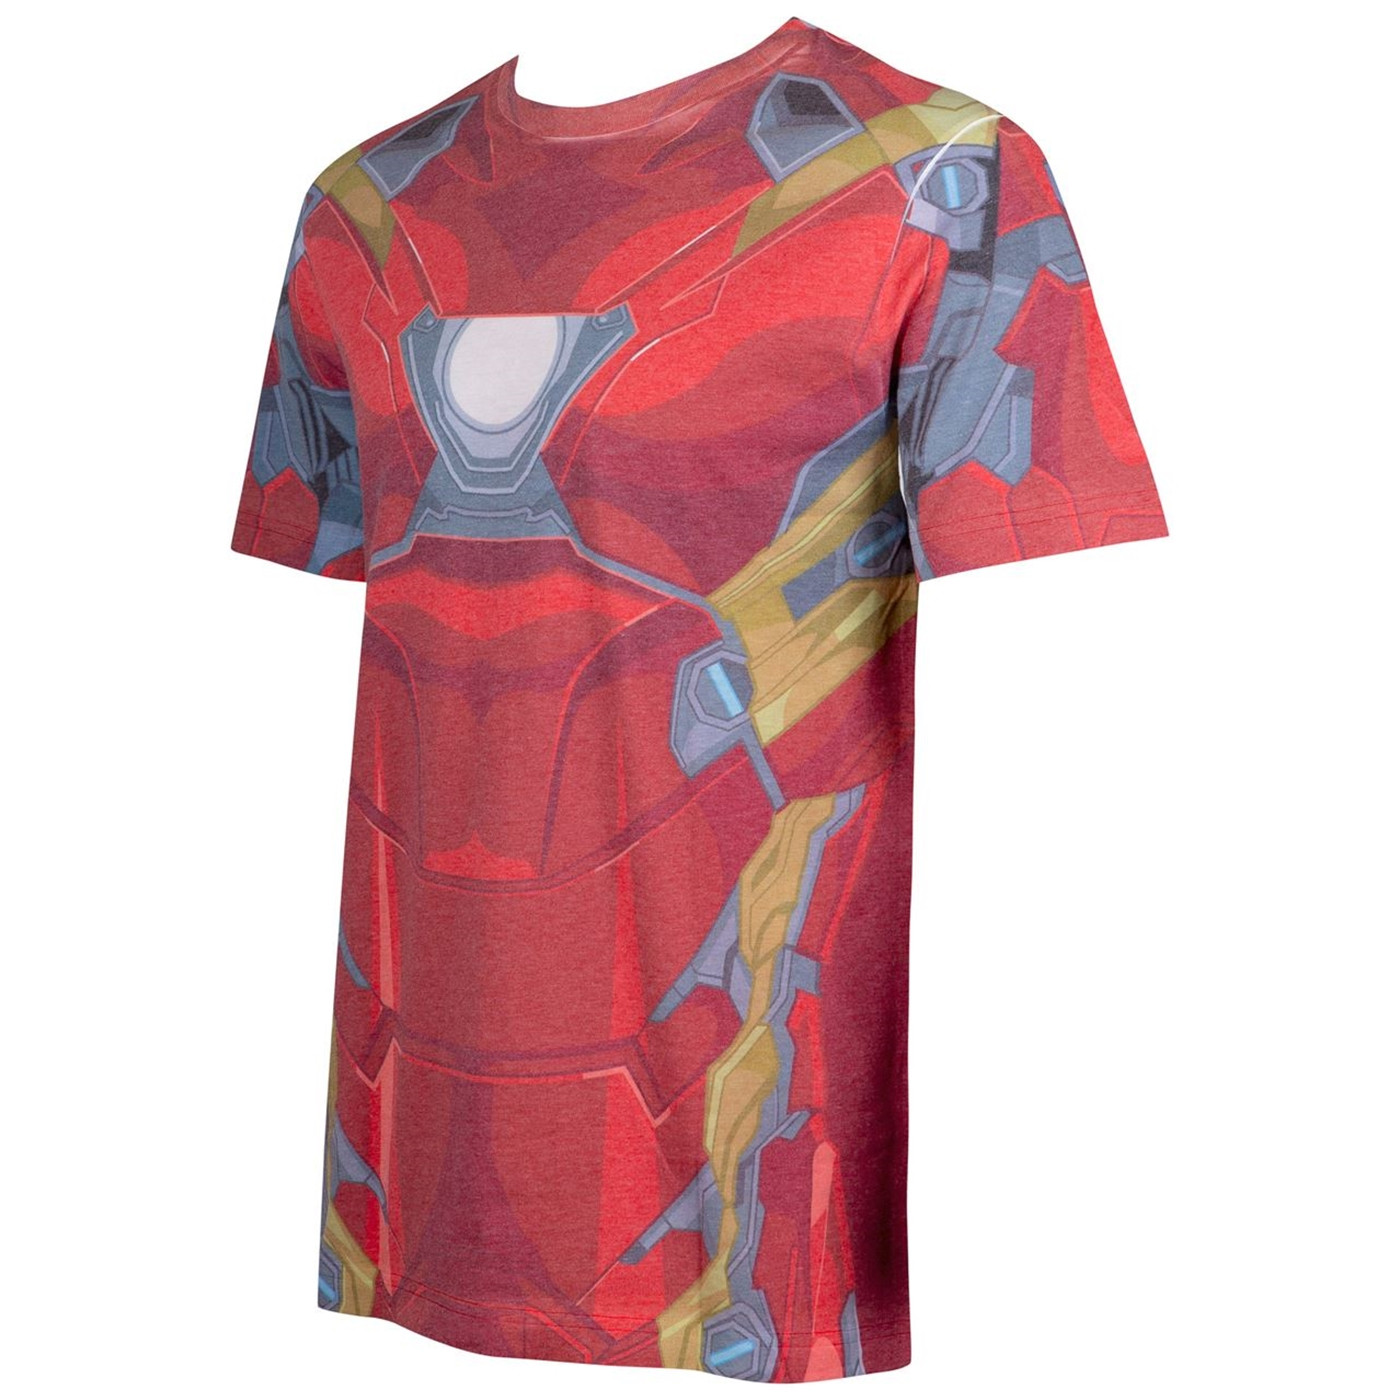 Iron Man Costume Sublimated Men's T-Shirt